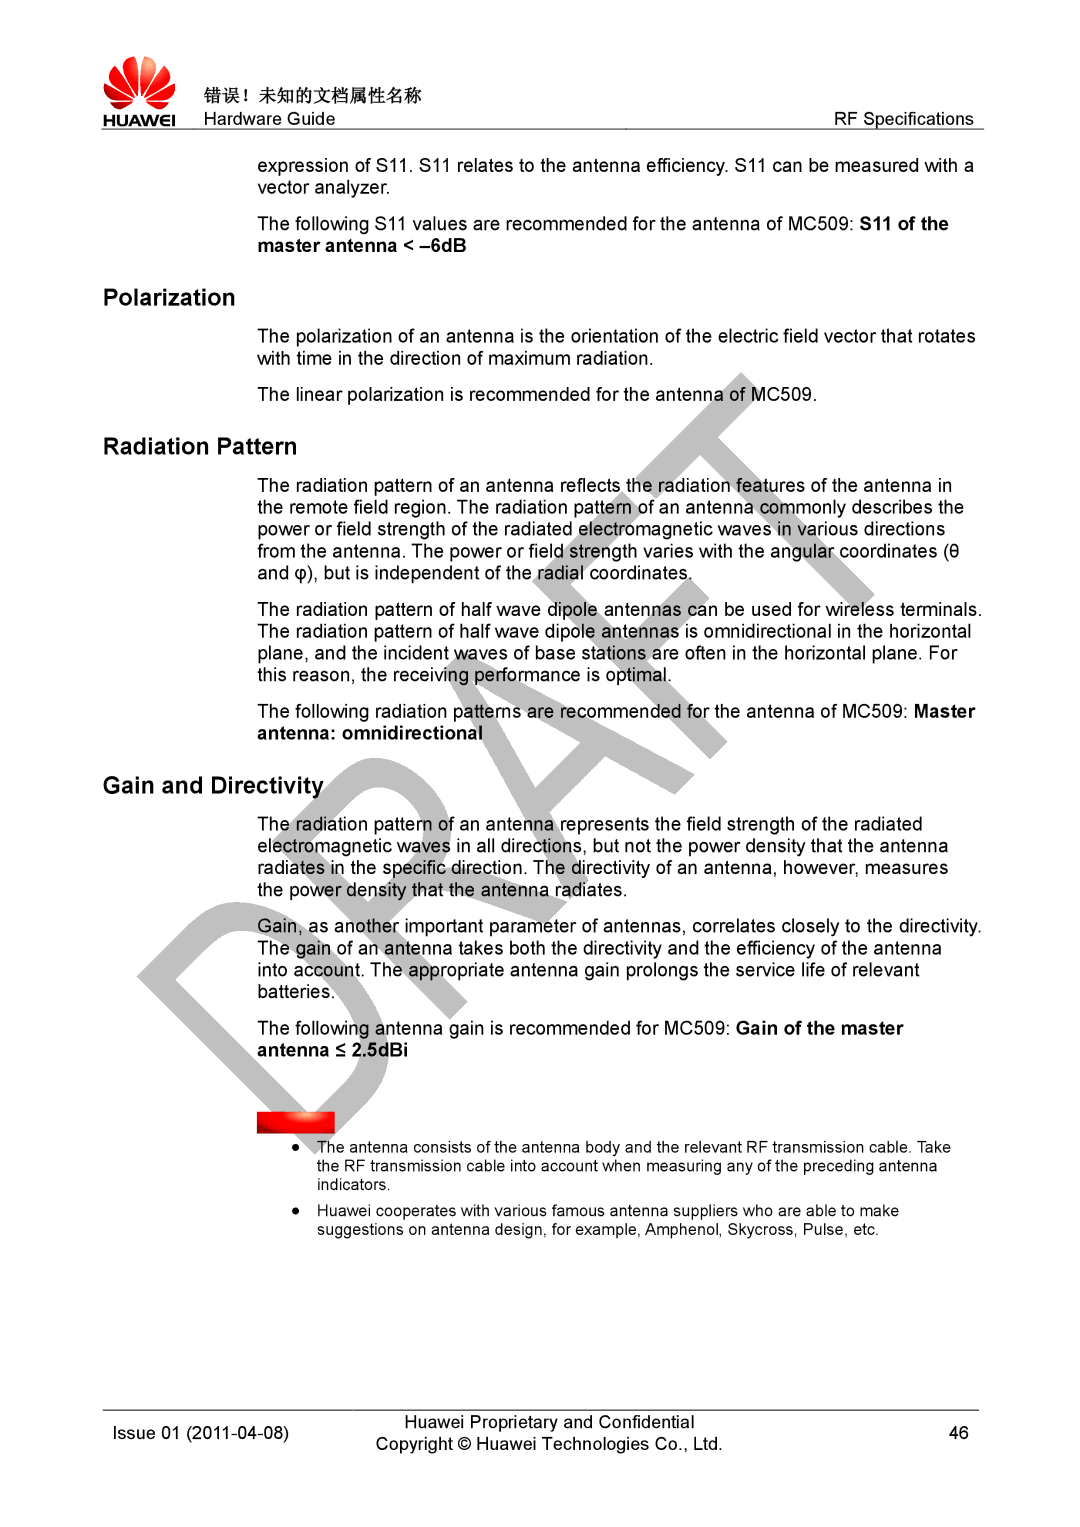 Huawei MC509 CDMA LGA manual Polarization, Radiation Pattern, Gain and Directivity 